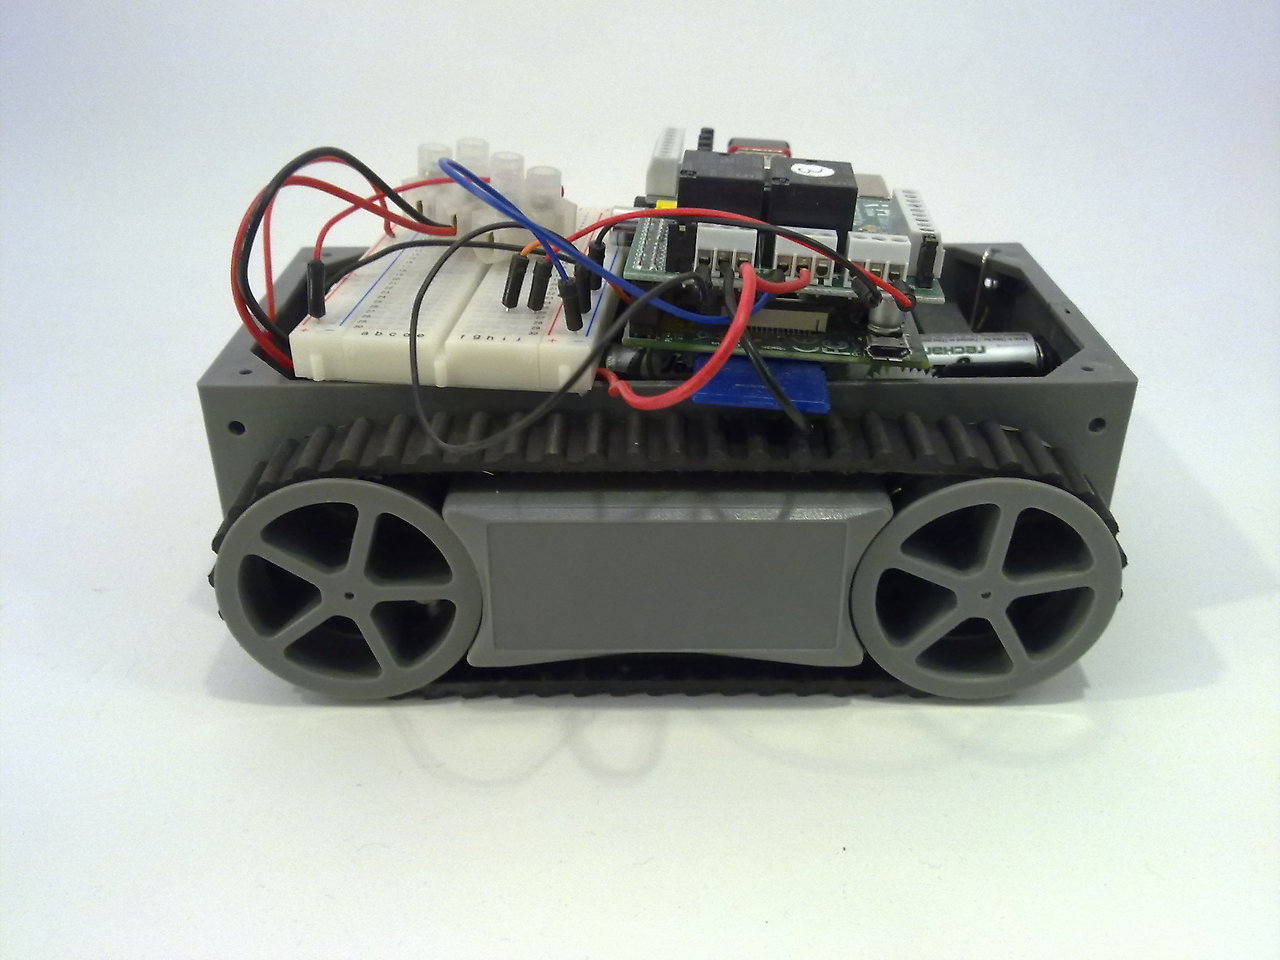 My Raspberry Pi web server - Building a remote control vehicle using a Raspberry Pi